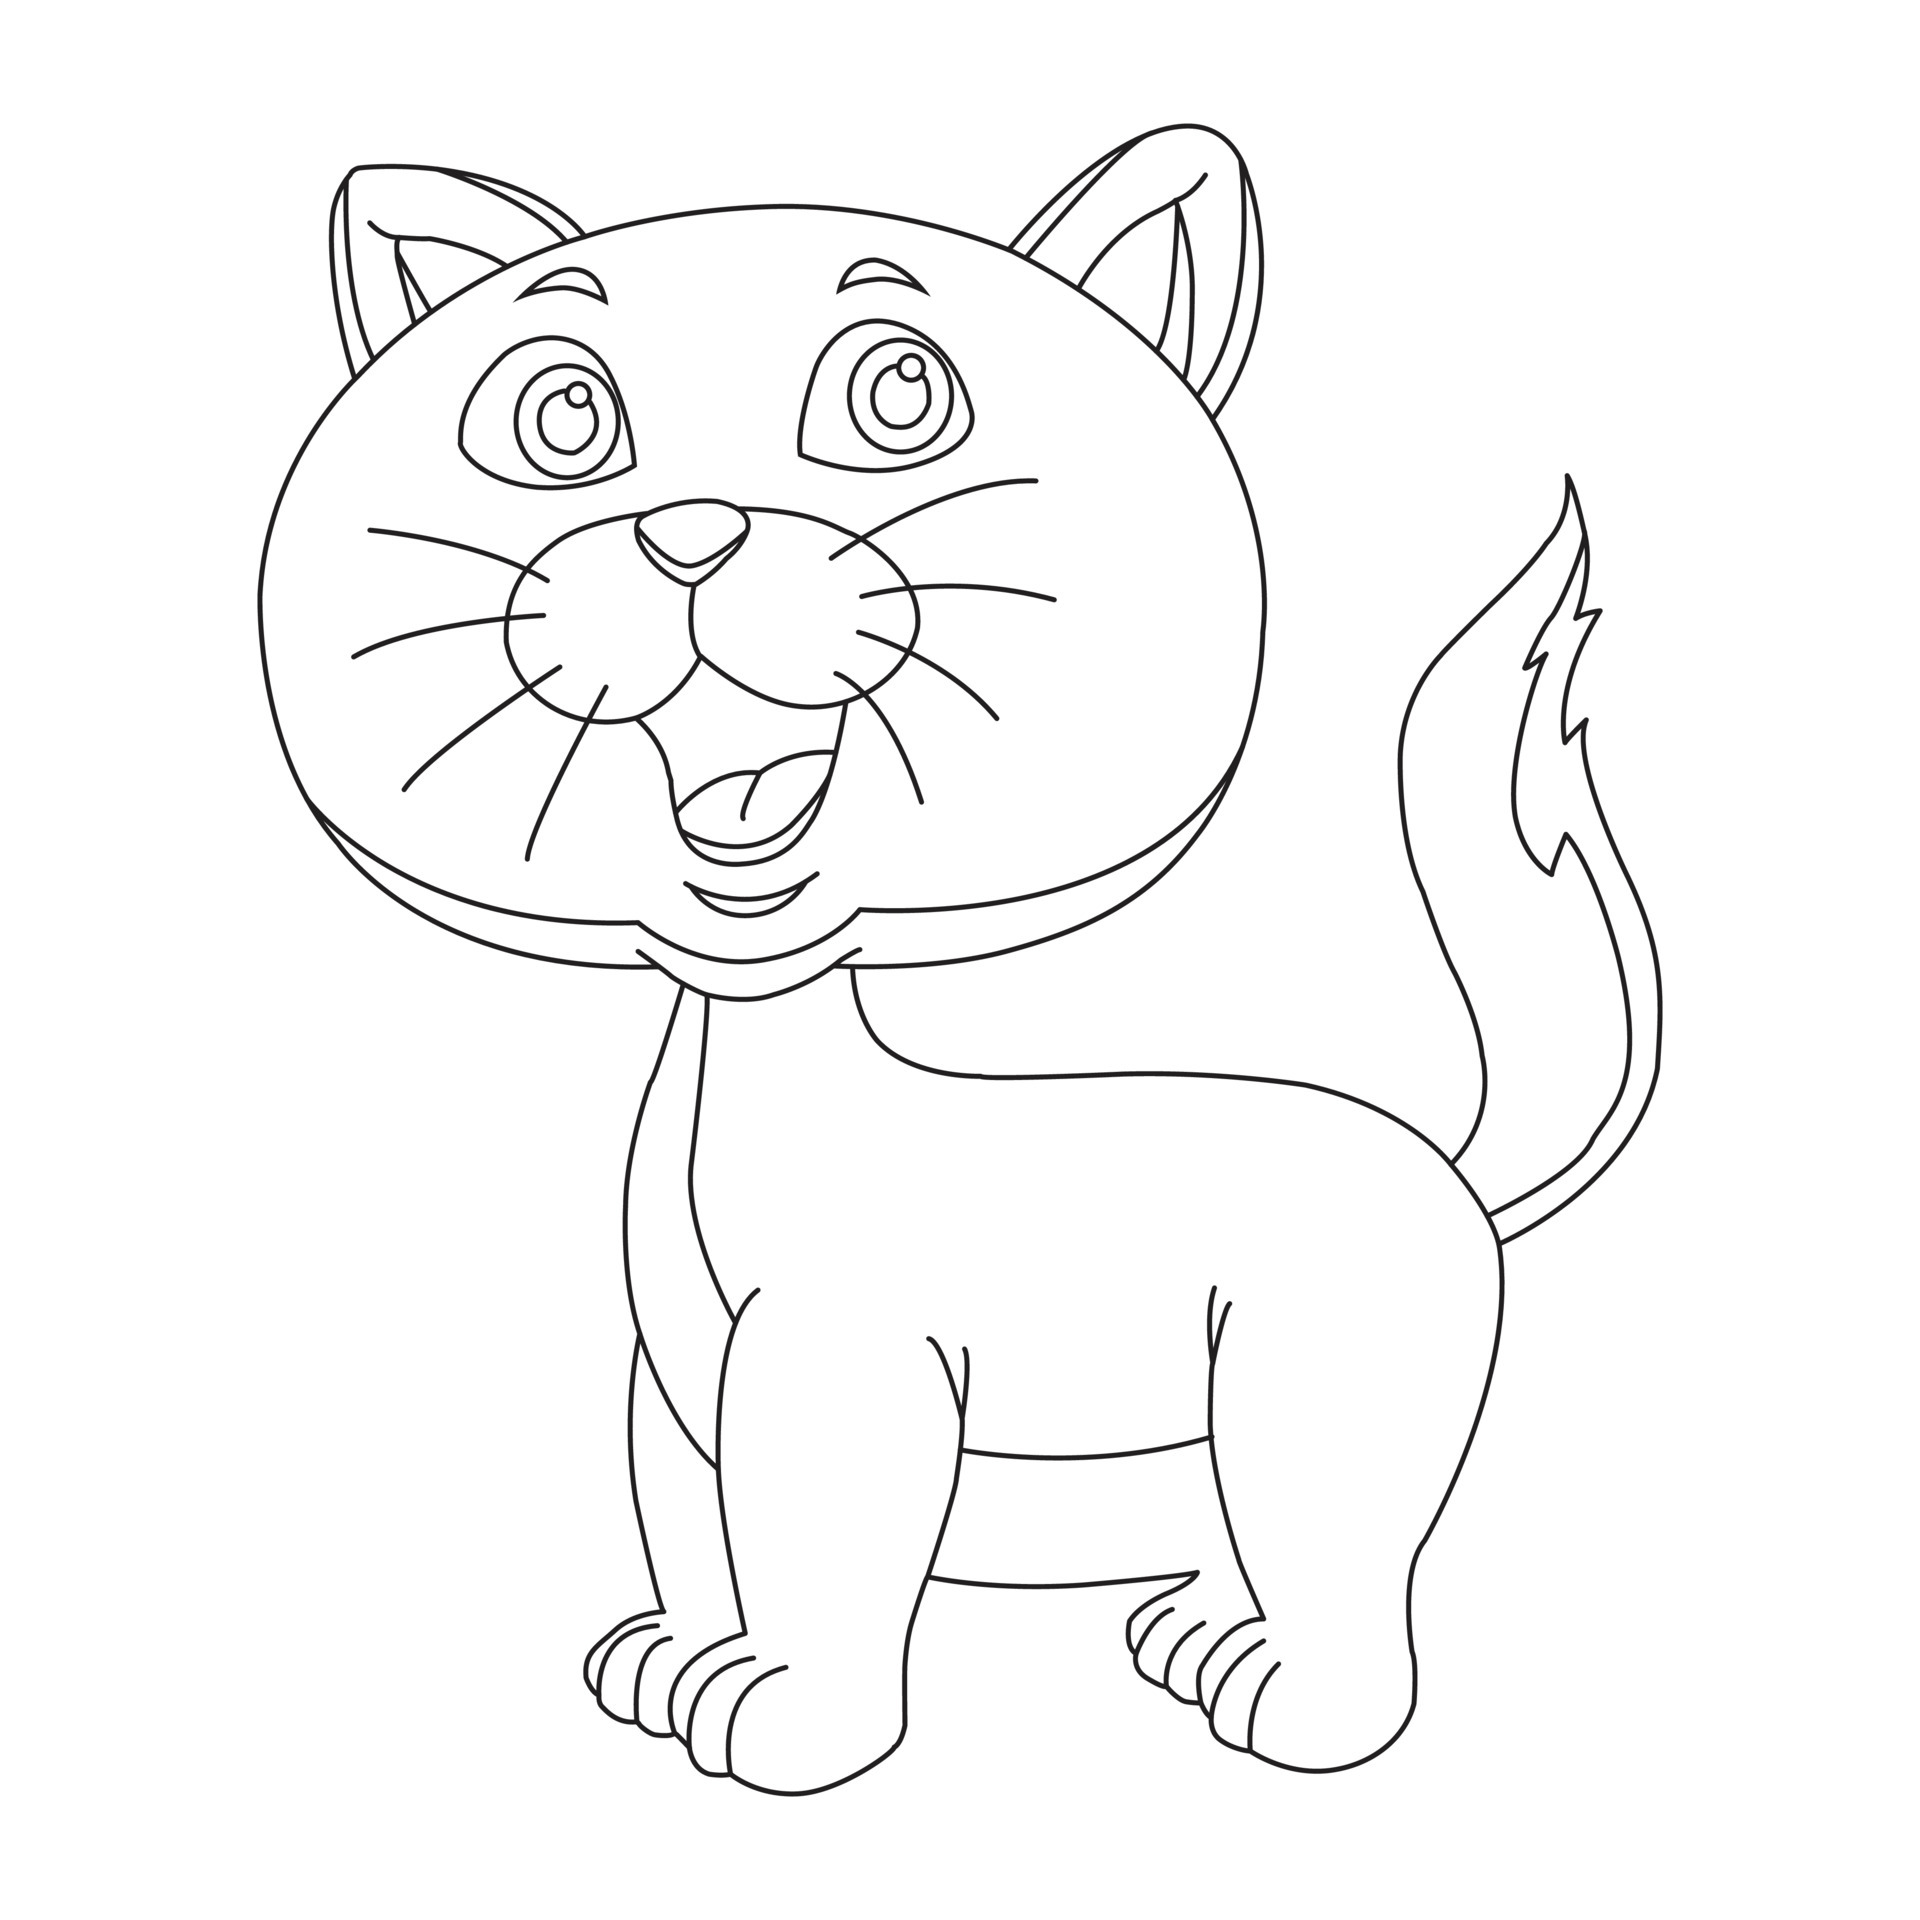 contorno da página para colorir do gato fofo dos desenhos animados